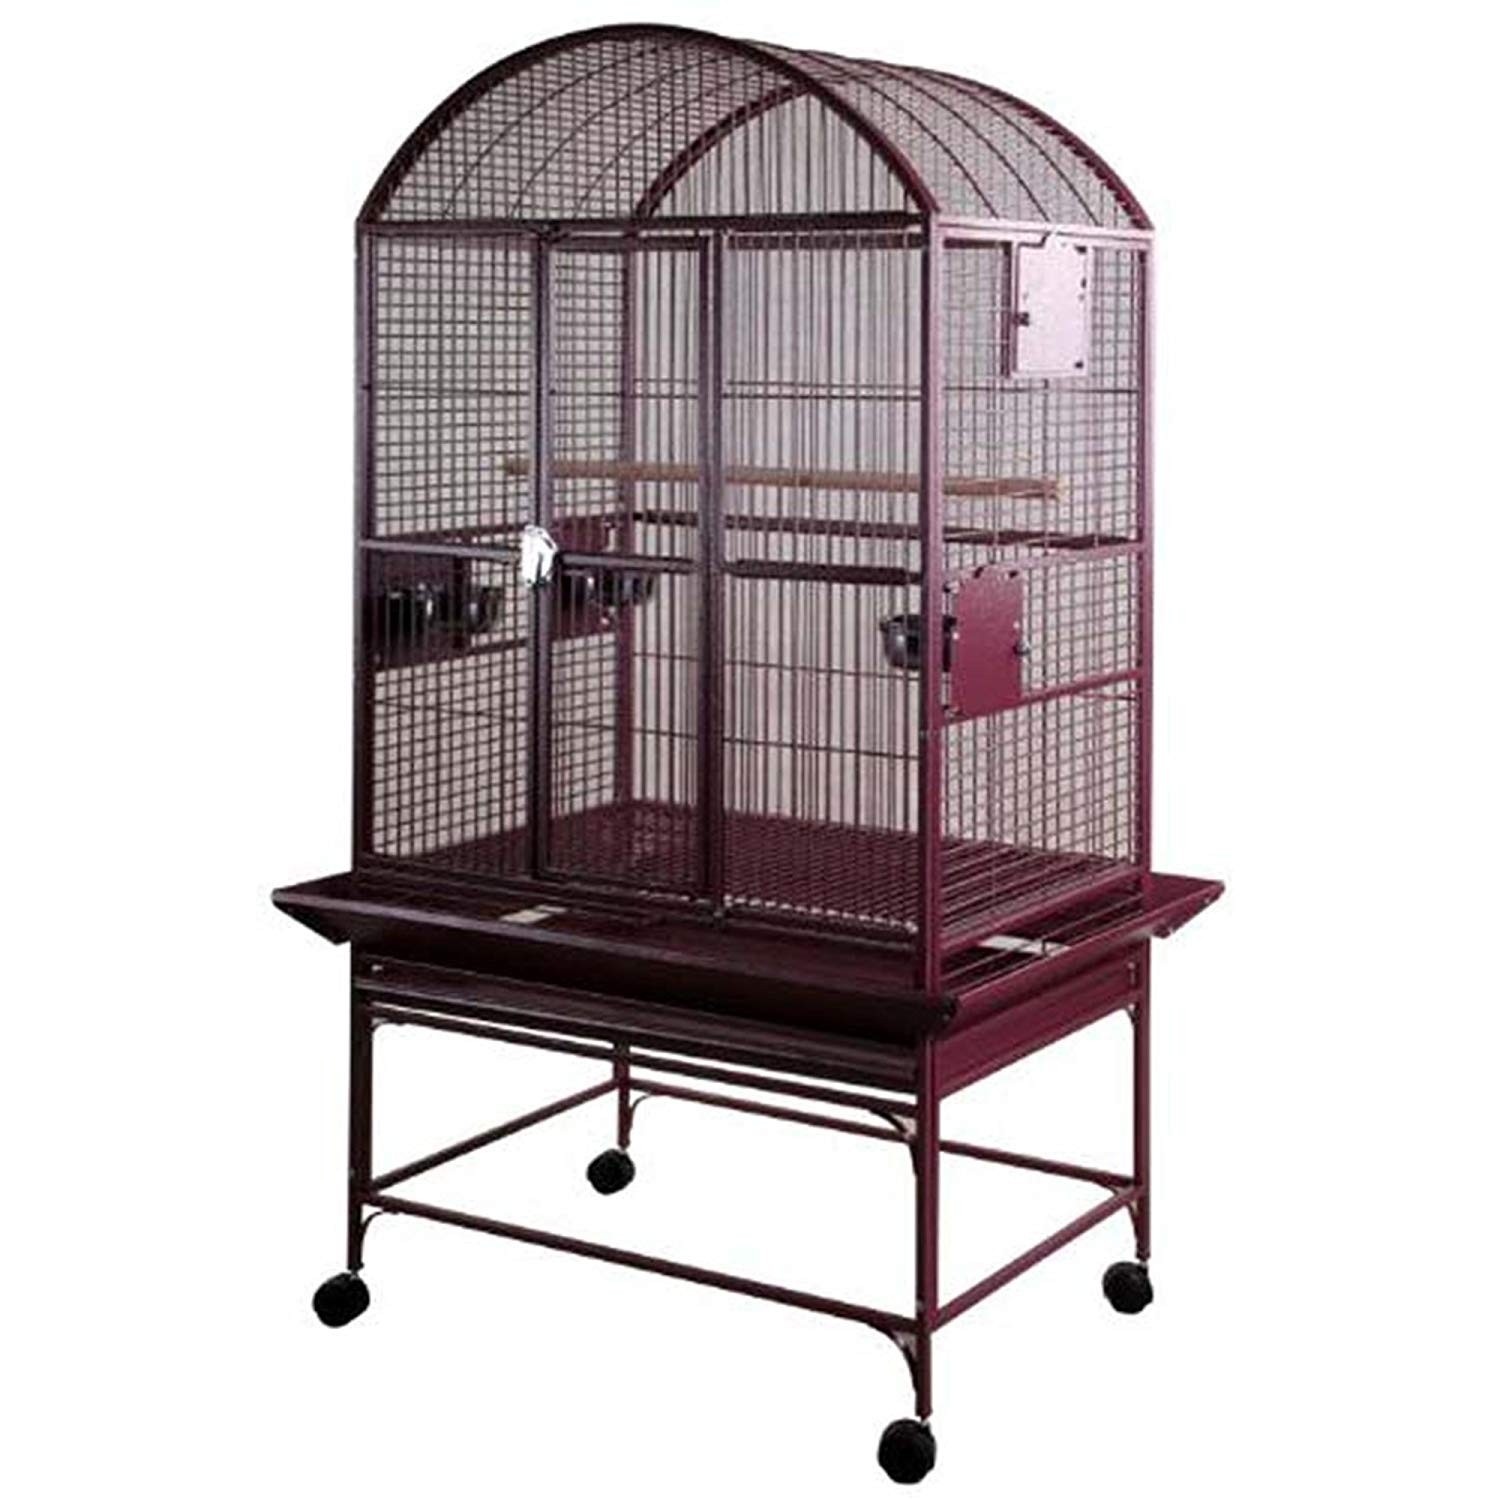 A e cage company dome top bird cage select pet